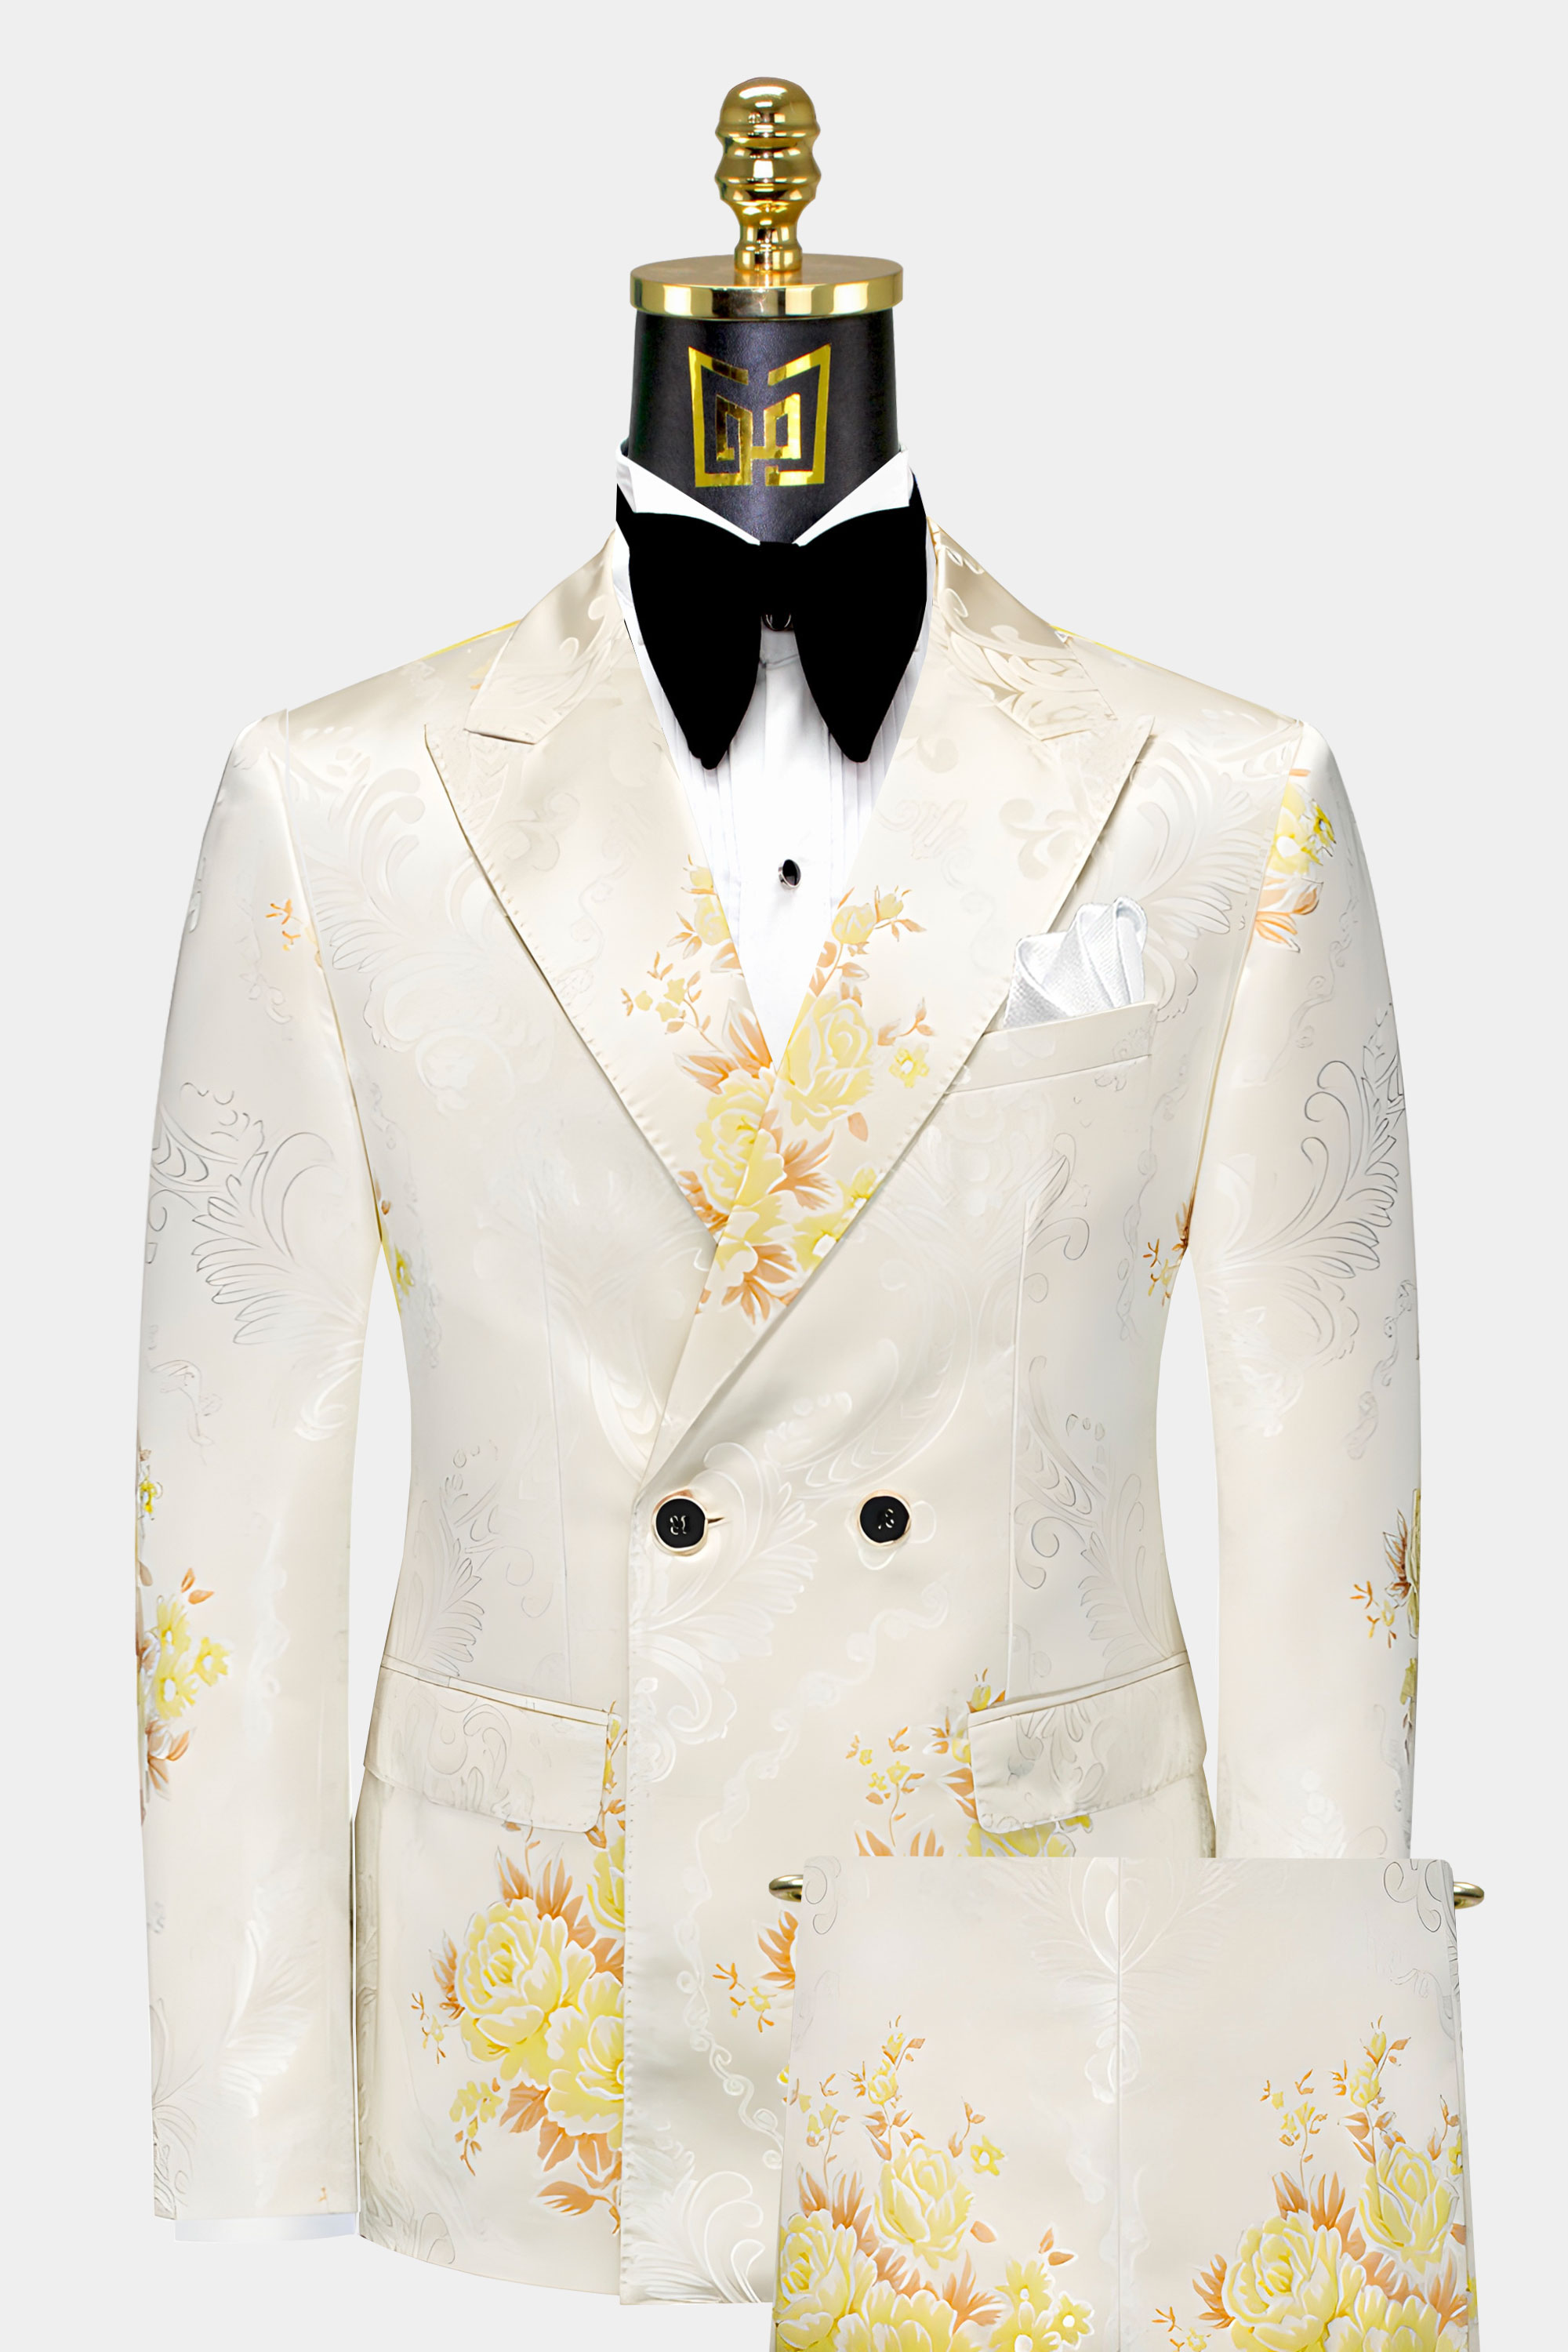 Mens-Cream-Suit-Douuble-Breasted-Floral-Prom-Wedding-Groom-Suit-from-Gentlemansguru.com